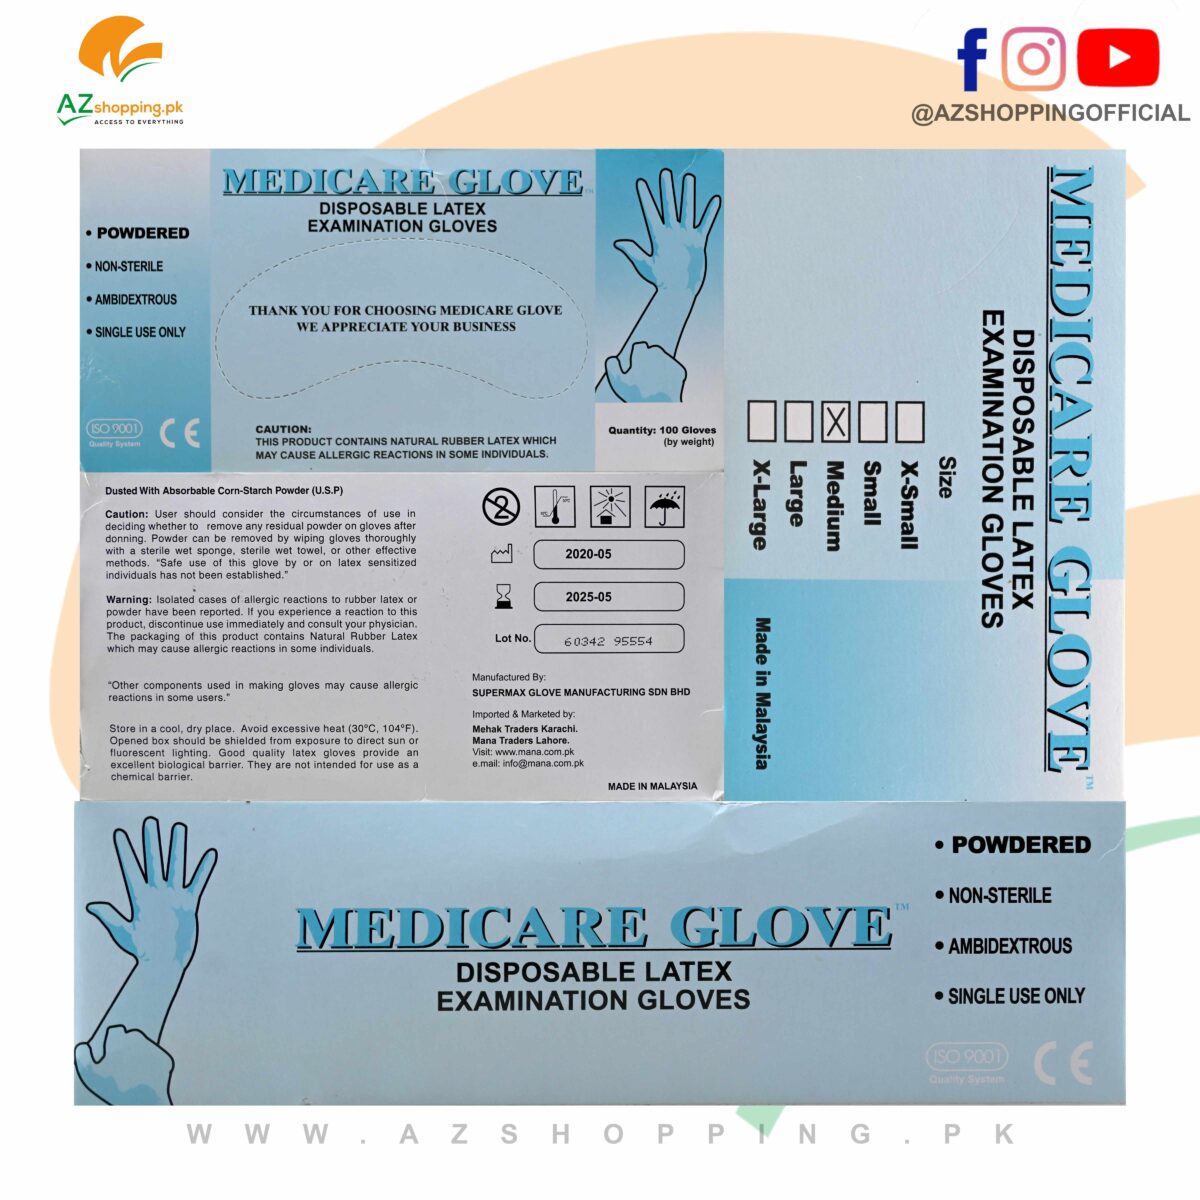 https://azshopping.pk/product/medicare-white-disposable-latex-examination-surgical-hand-gloves-box-quantity-150-nitrile-pro-non-sterile-powder-free-latex-free/